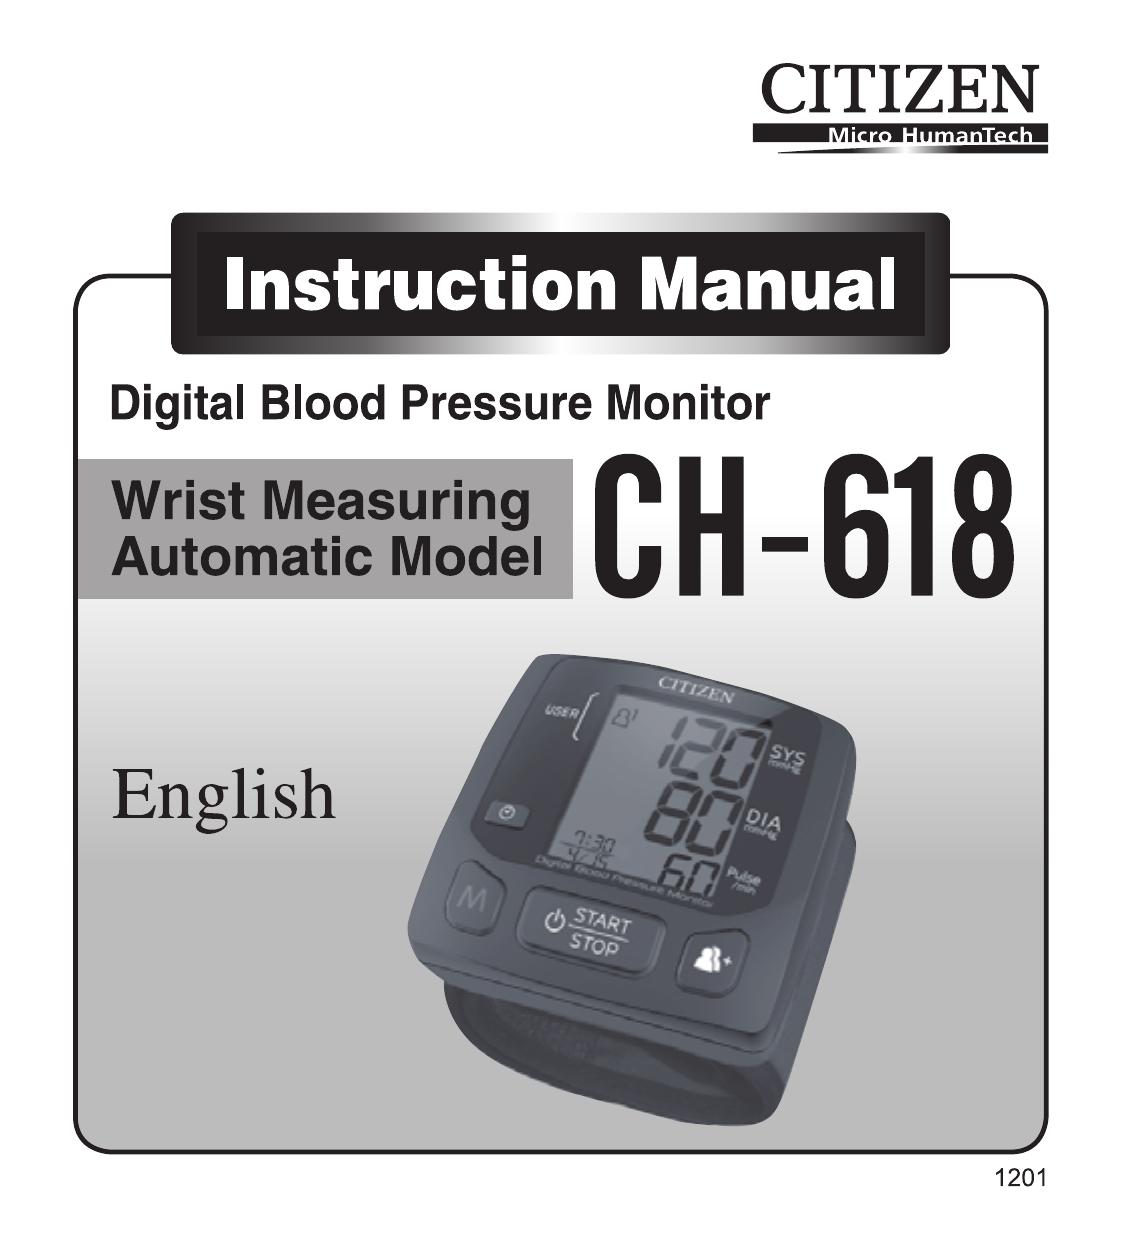 Citizen CH-618 Blood Pressure Monitor User Manual